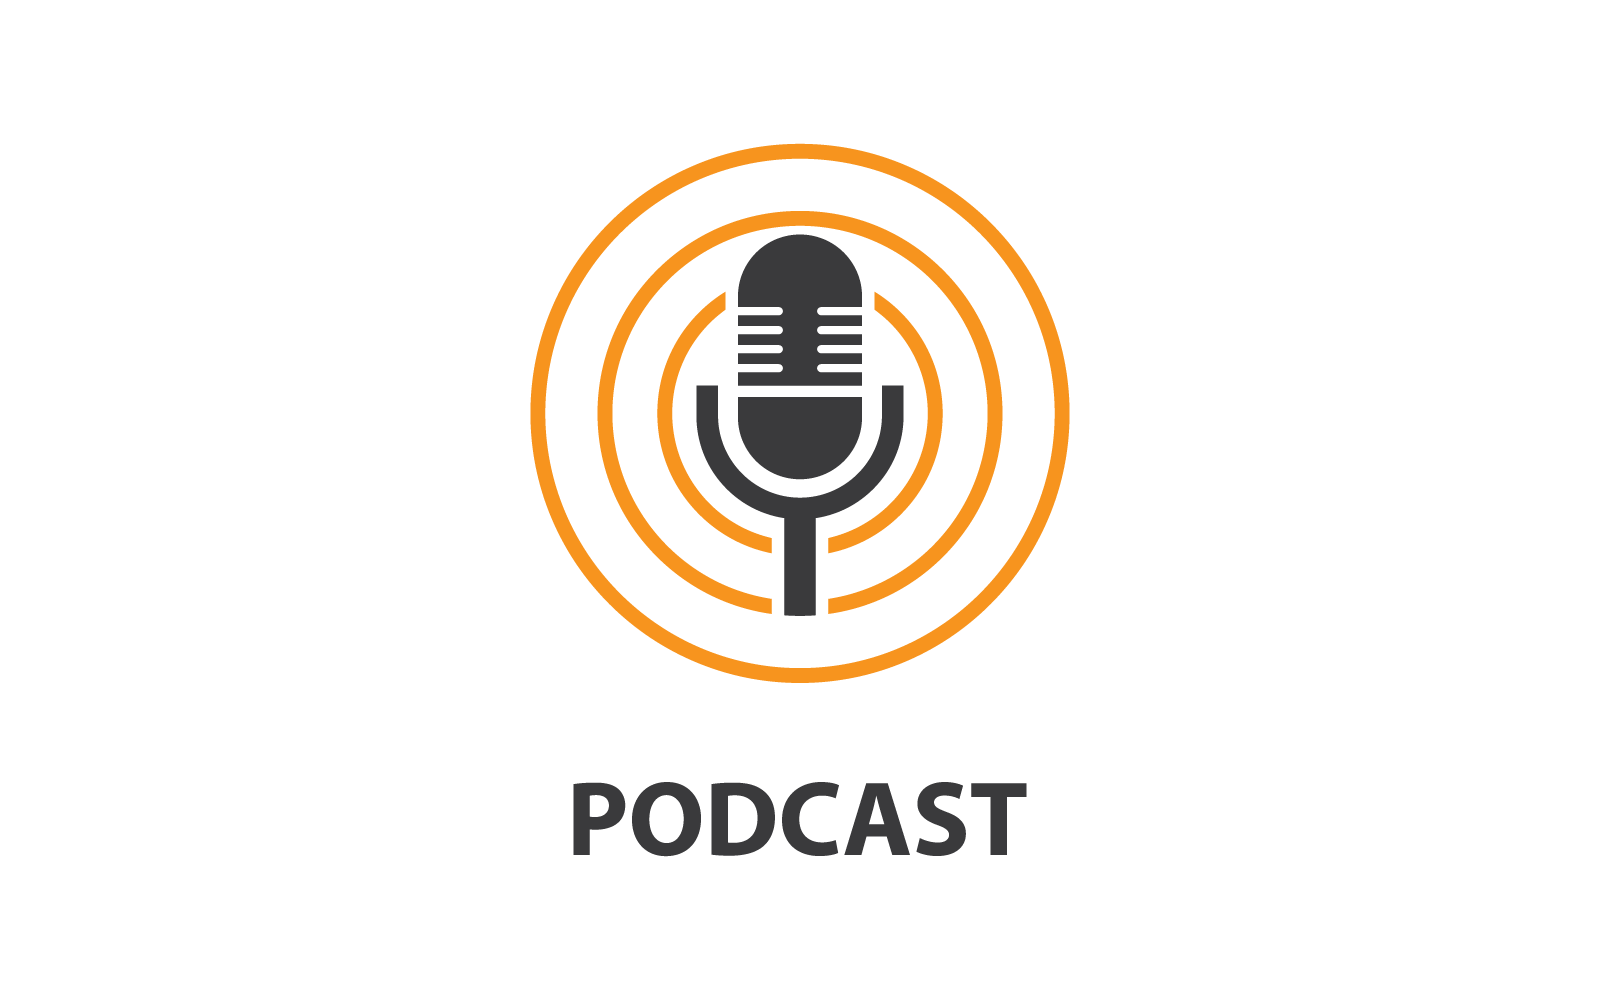 Podcast Logo Illustration Vector Flat Design eps 10 Logo Template